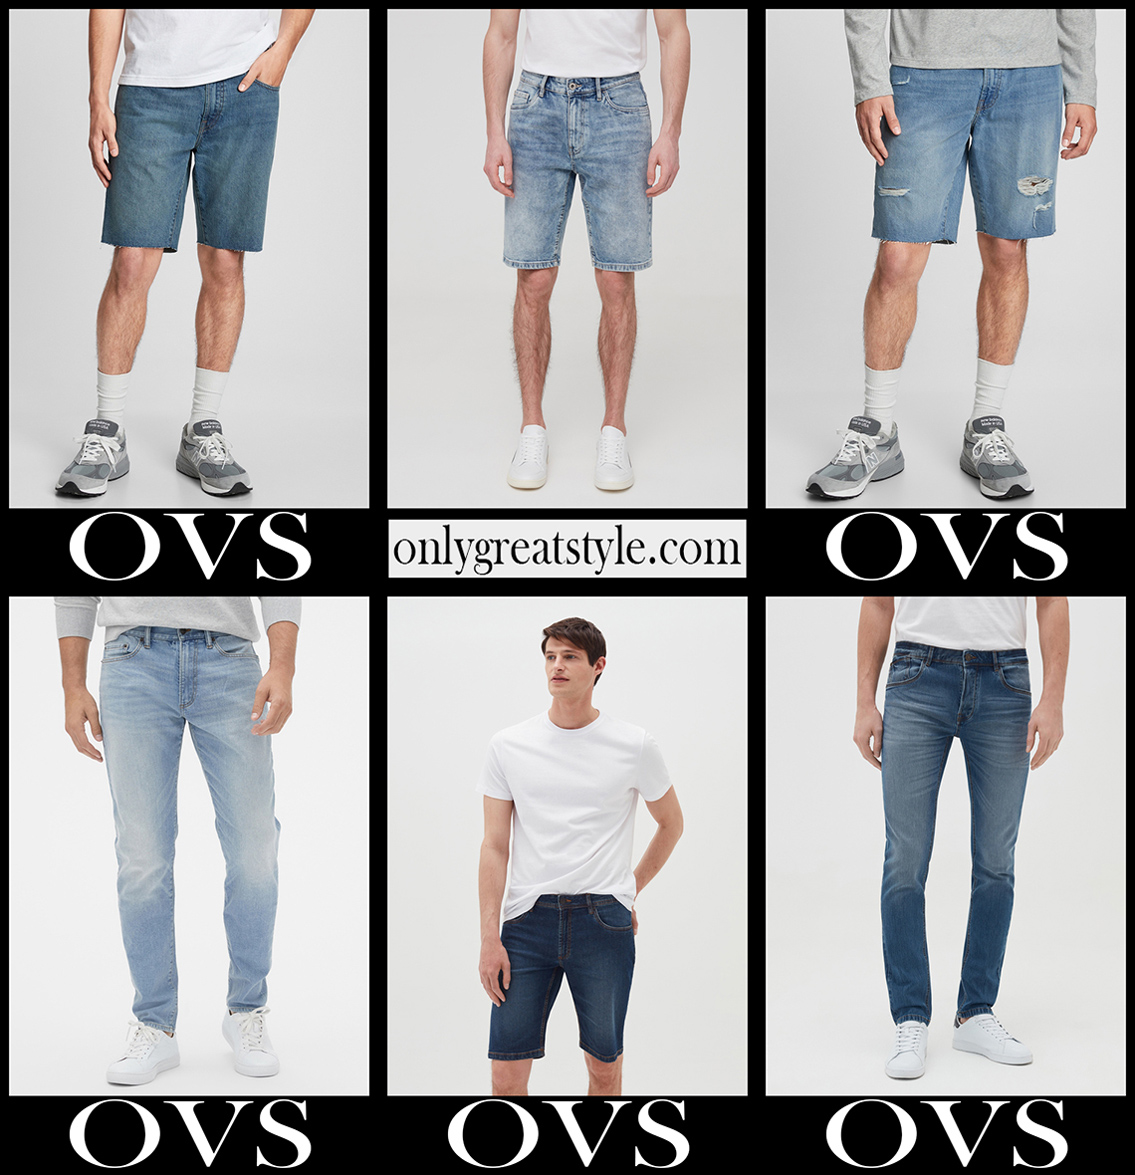 OVS jeans 2021 new arrivals mens clothing denim